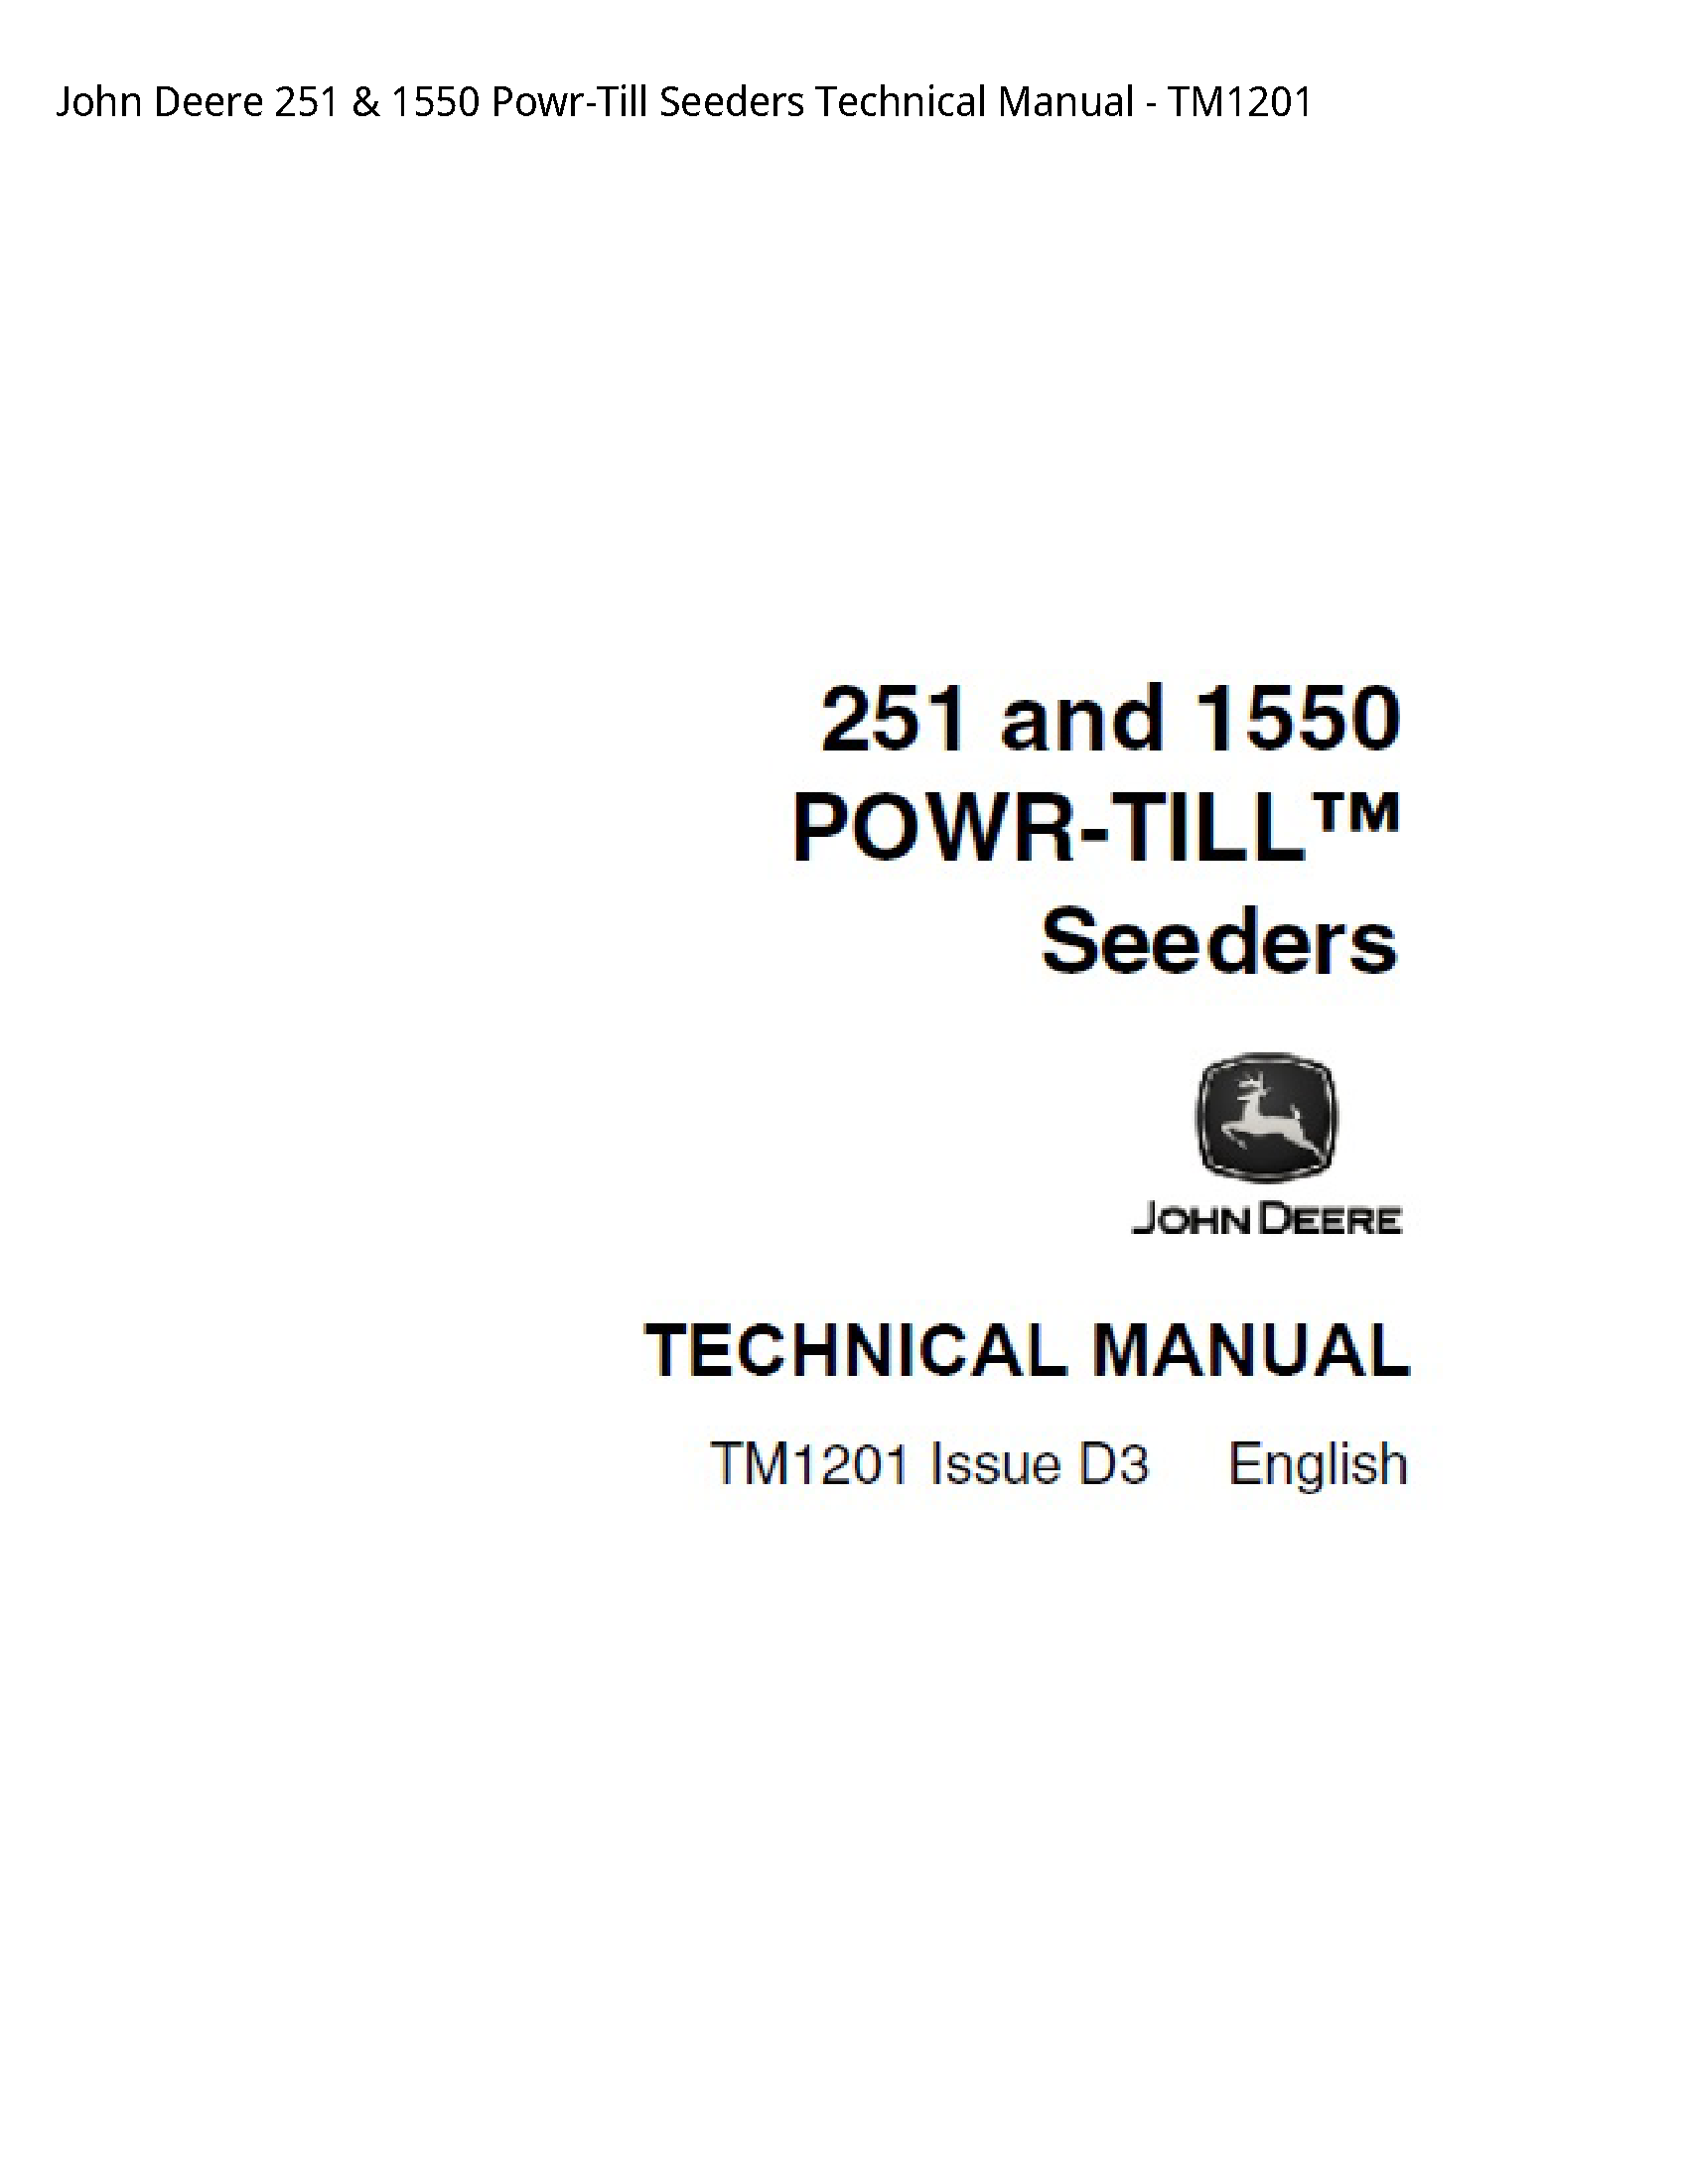 John Deere 251 Powr-Till Seeders Technical manual